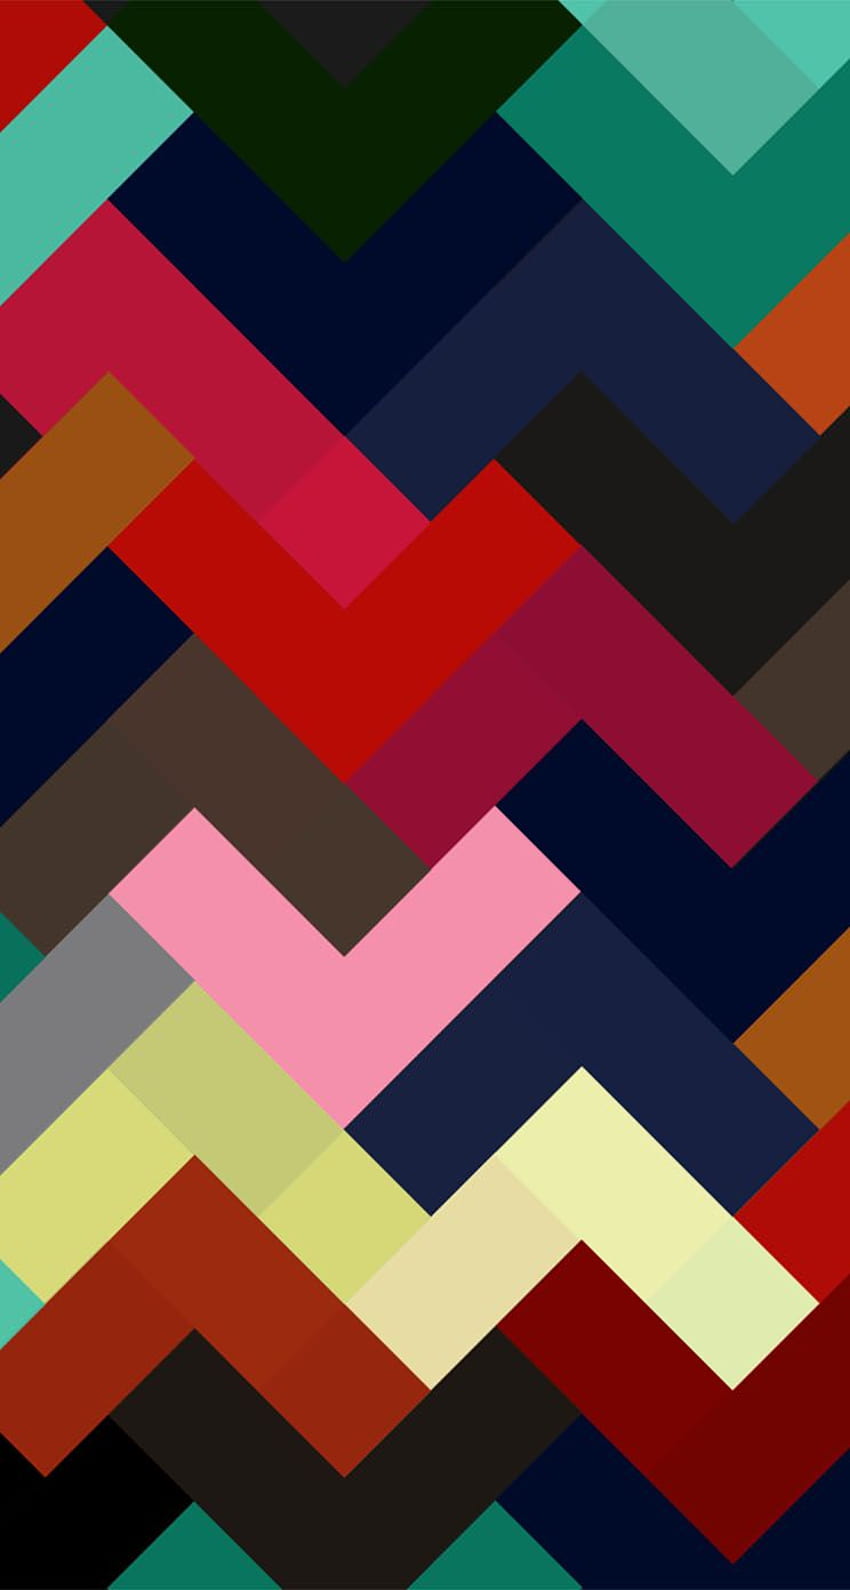 The iPhone Colour Geometric HD phone wallpaper